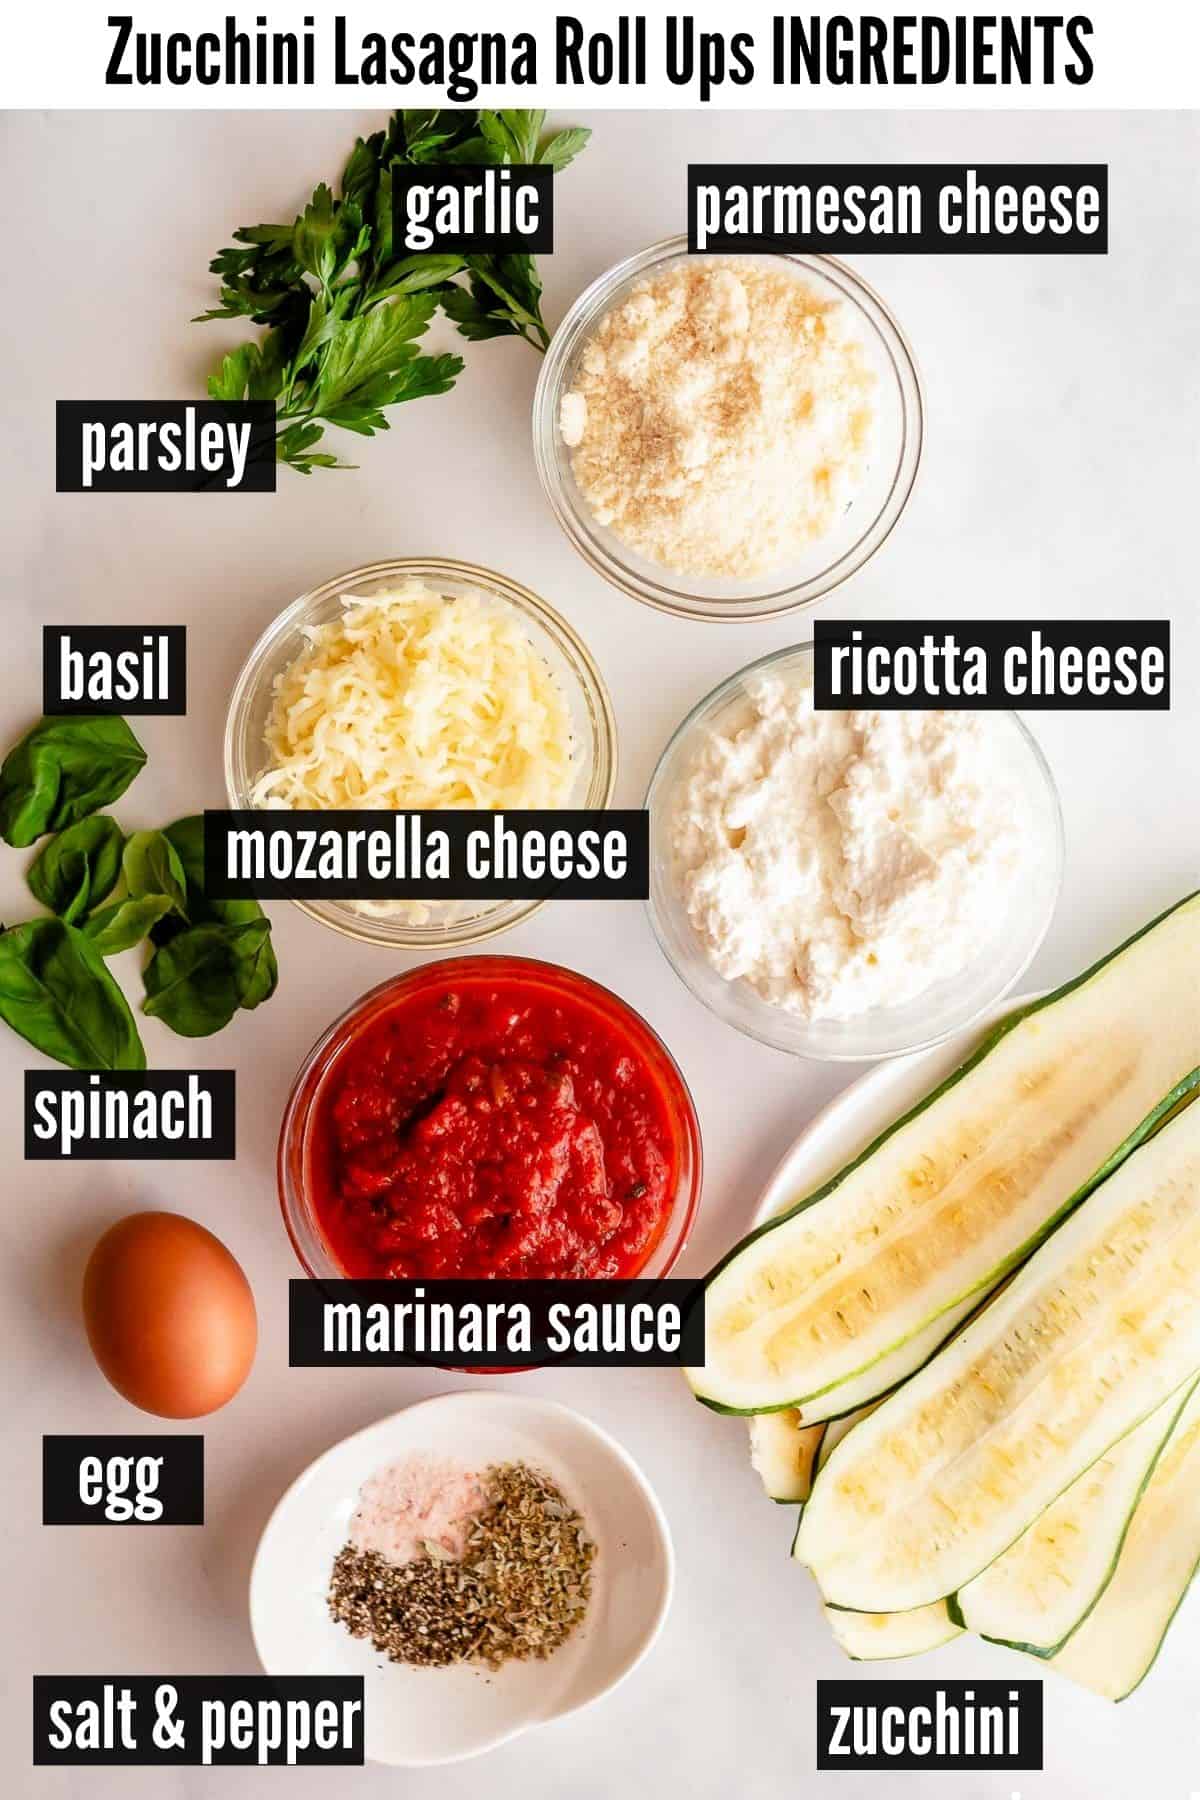 zucchini roll ups ingredients